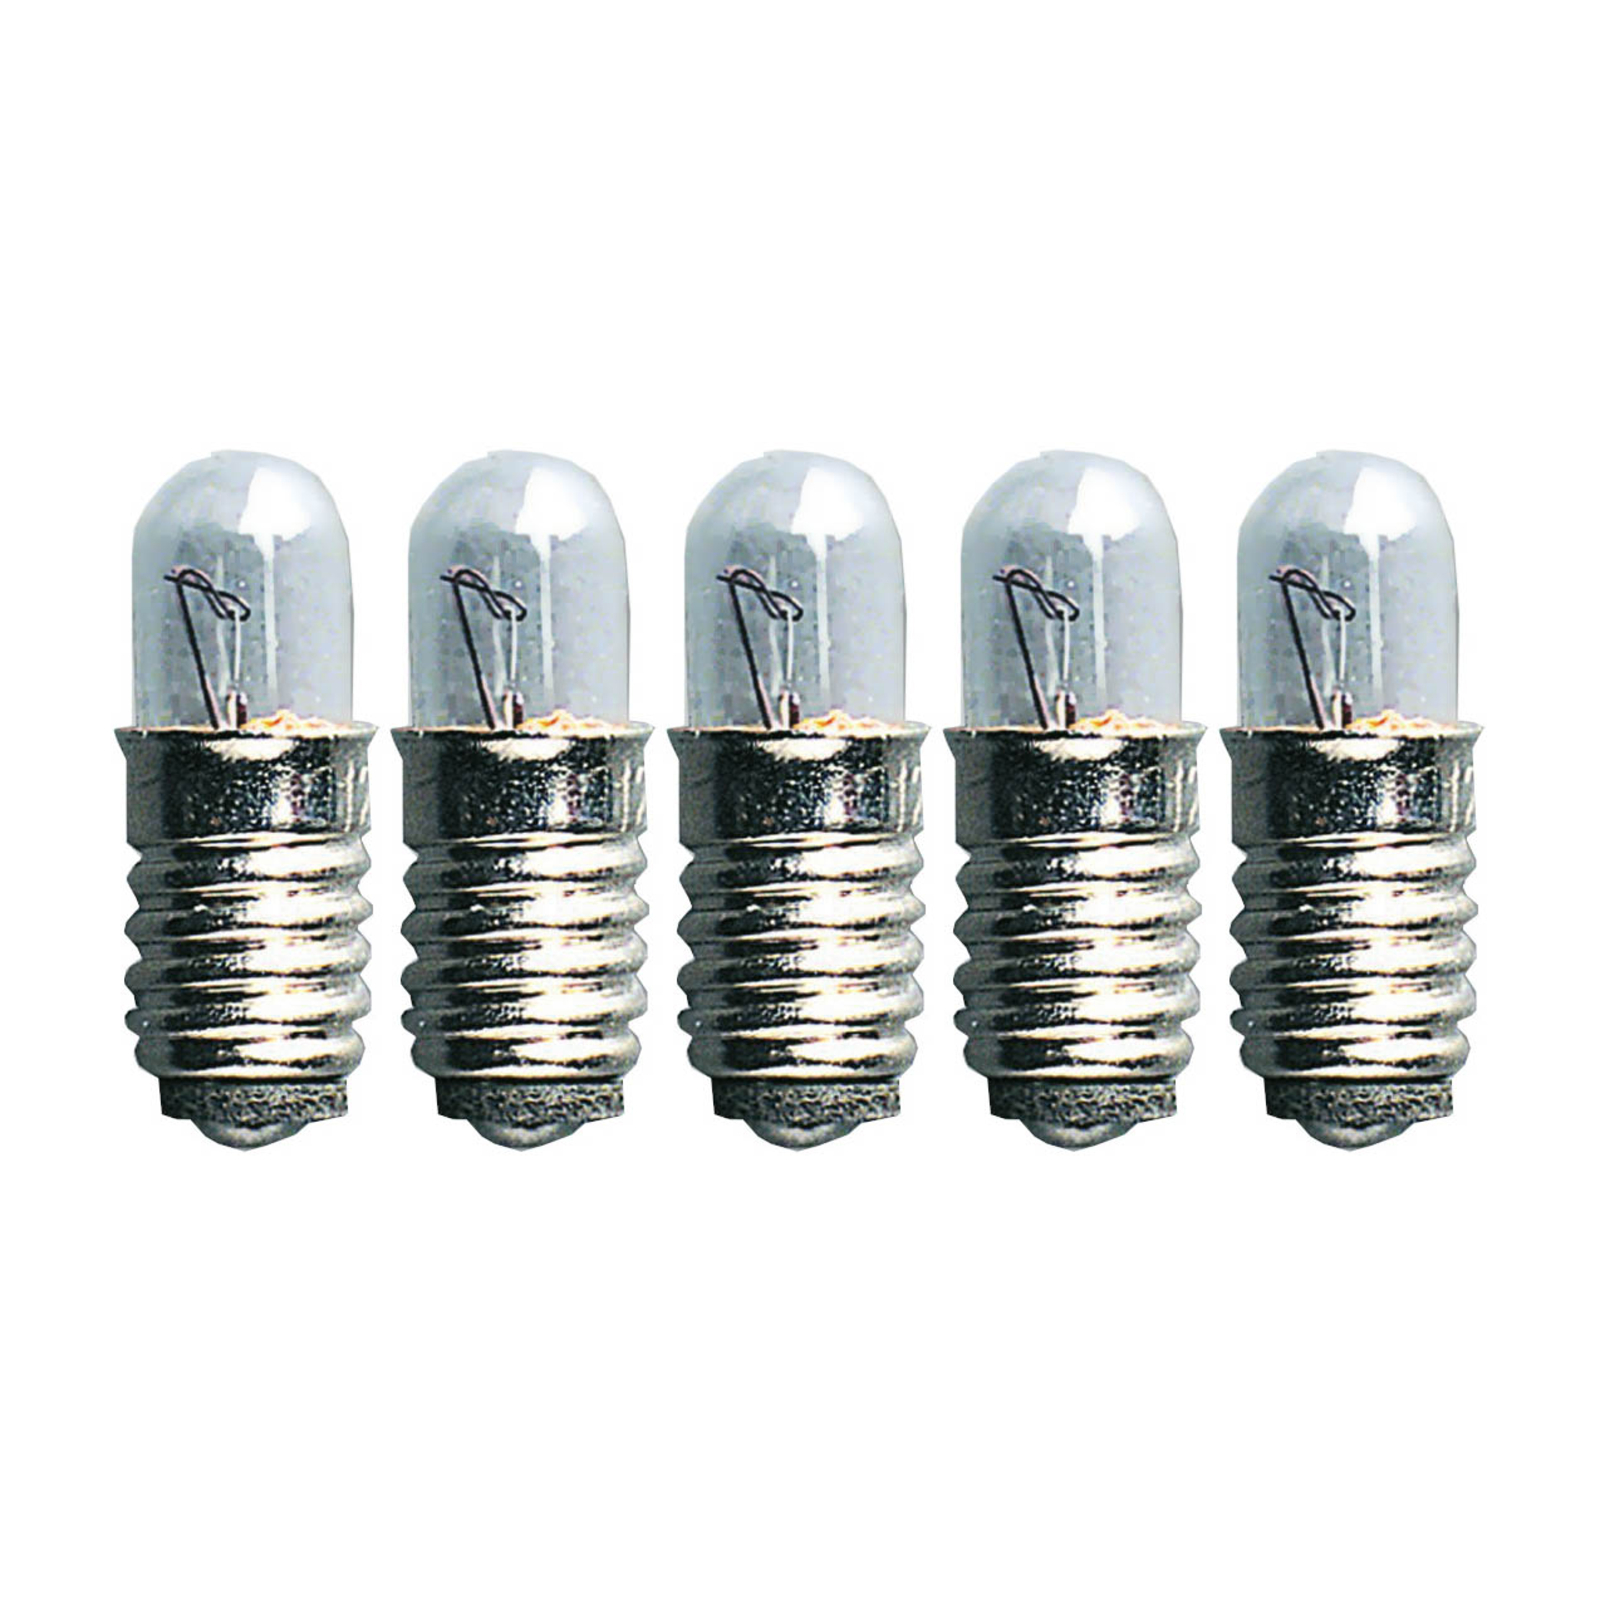 E5 0.6 W 12V 5 bulbs for LV window candle, clear